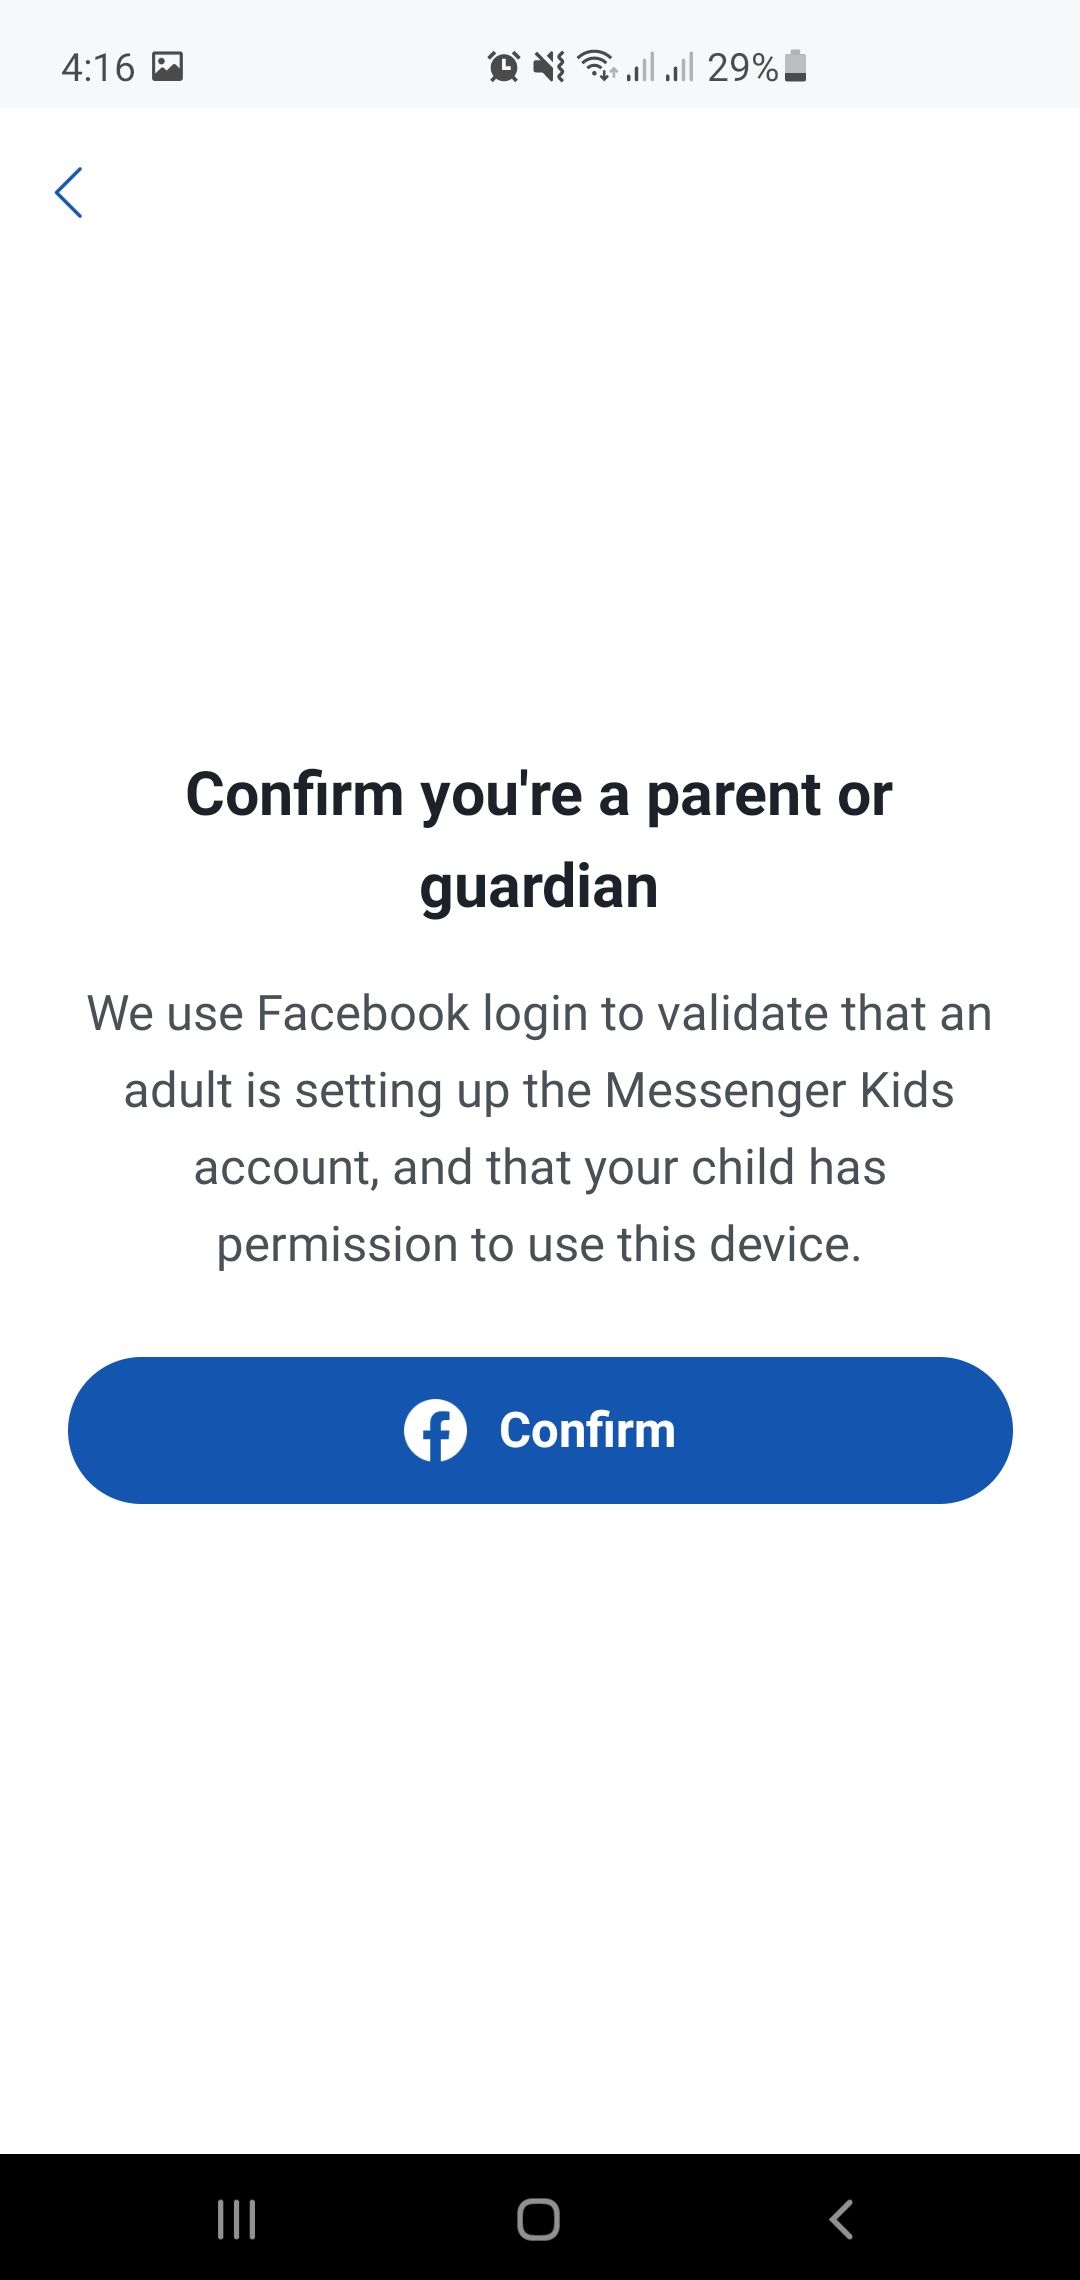 Confirm you're a parent on Messenger Kids